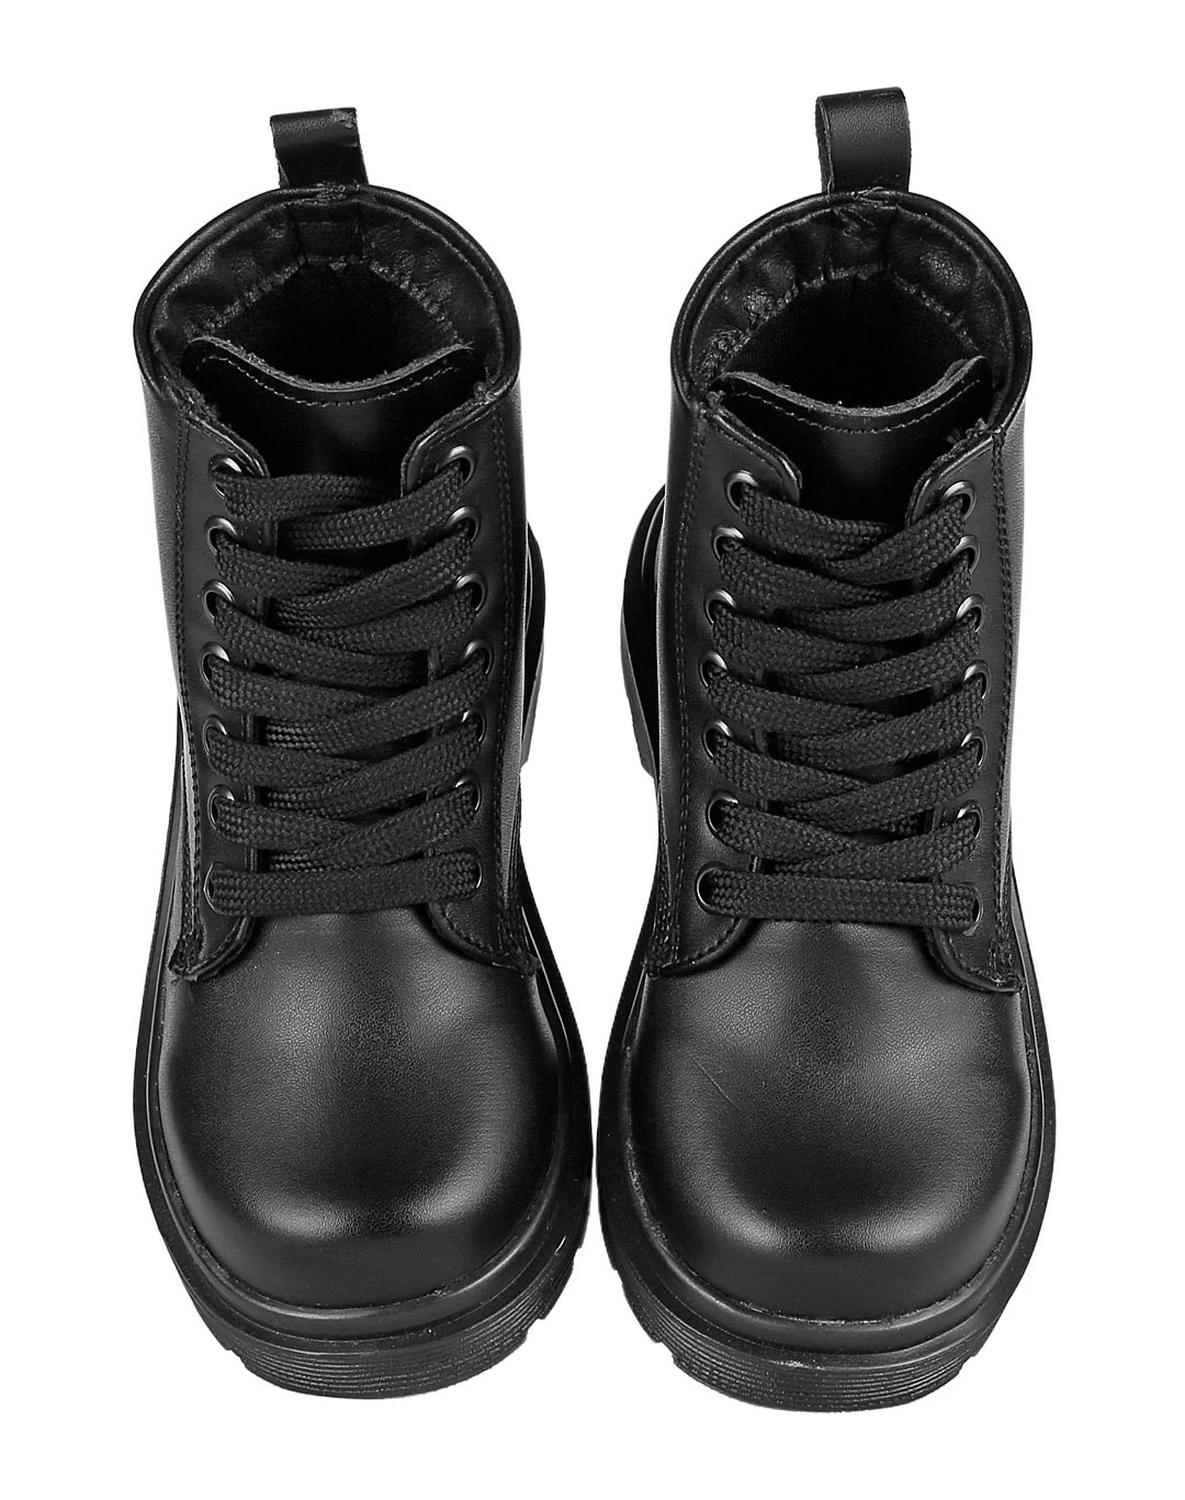 Zapato Escolar Botin Niña Negro Piel Stfashion 17803802